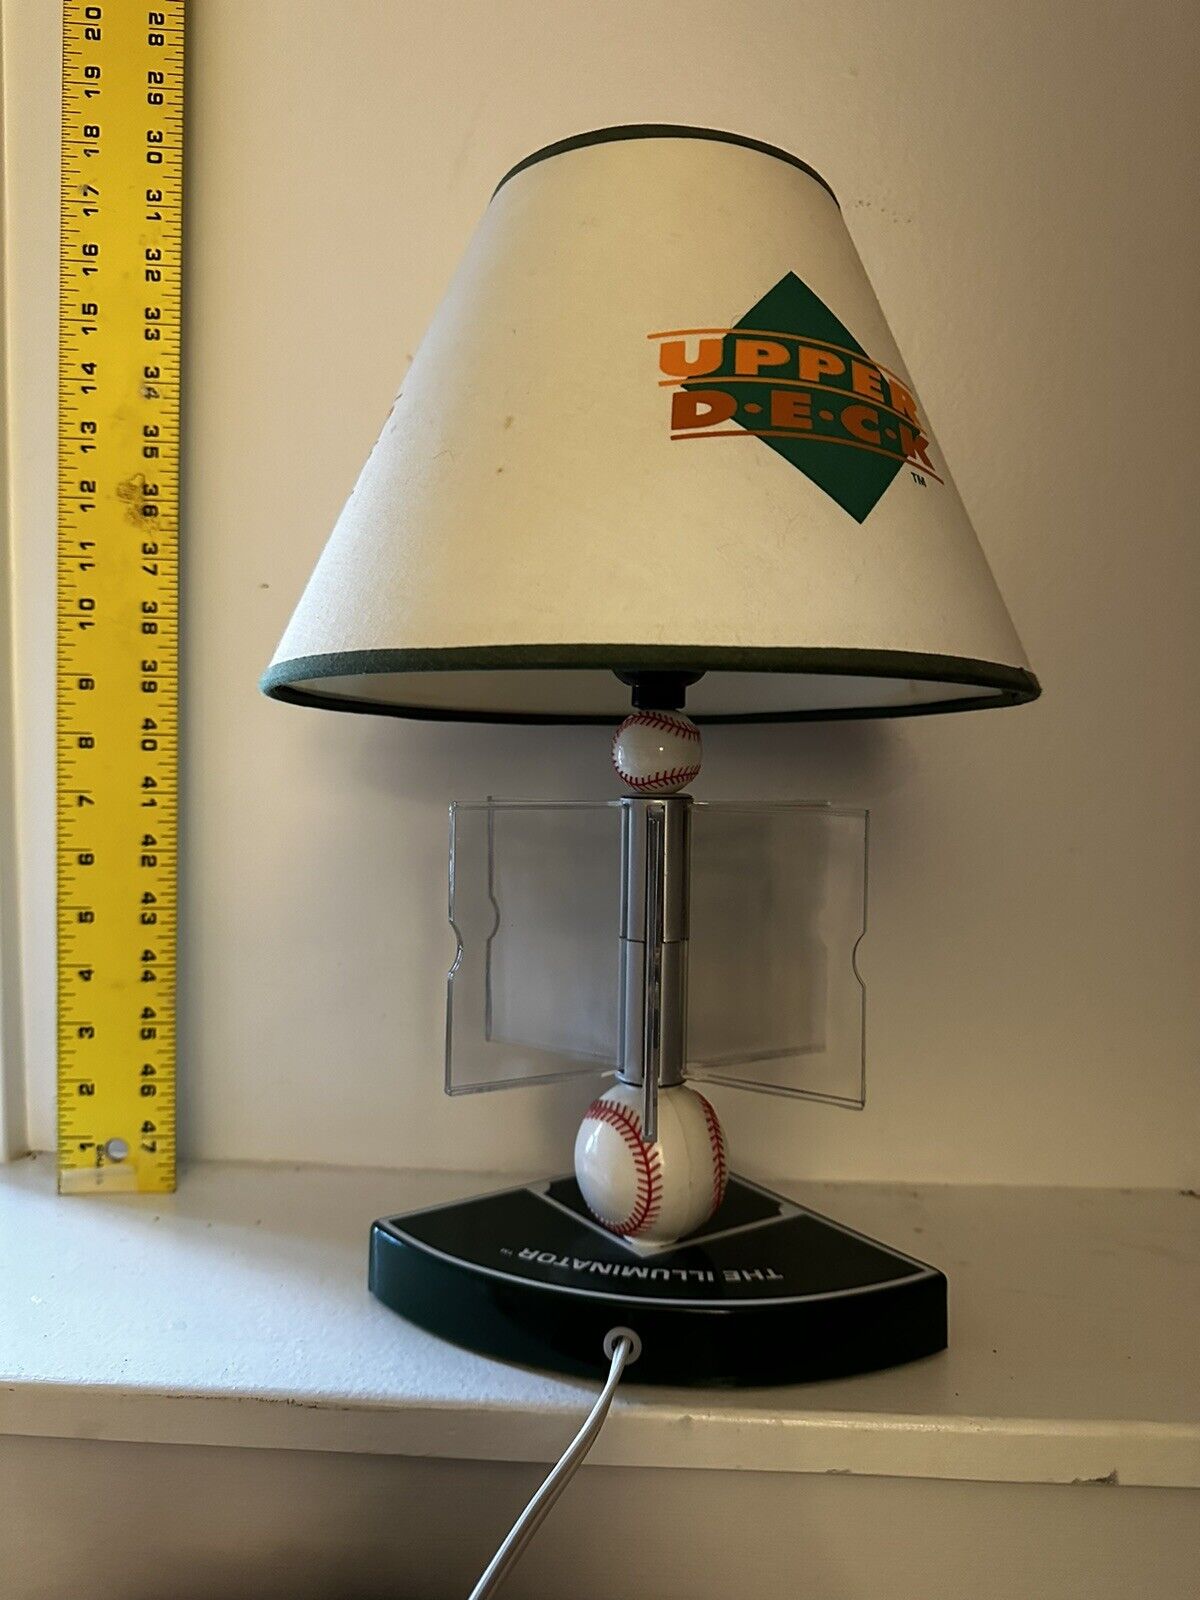 Vintage 1996 Upper Deck Illuminator Baseball Card Collectible Lamp W/card Slots